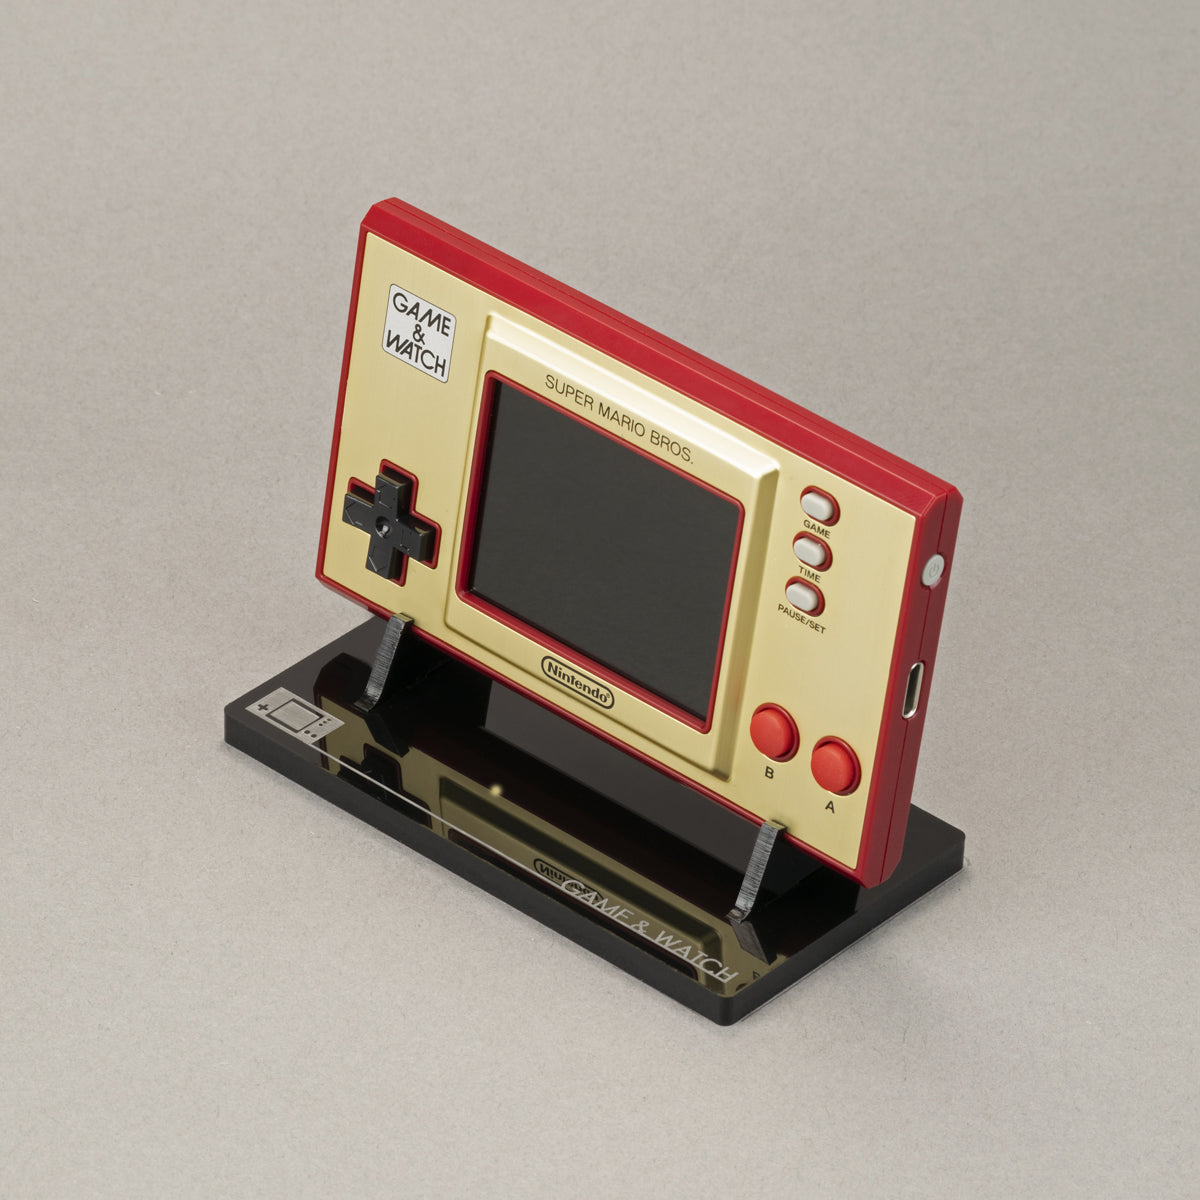 The Legend of Zelda NES Cartridge Display – Rose Colored Gaming